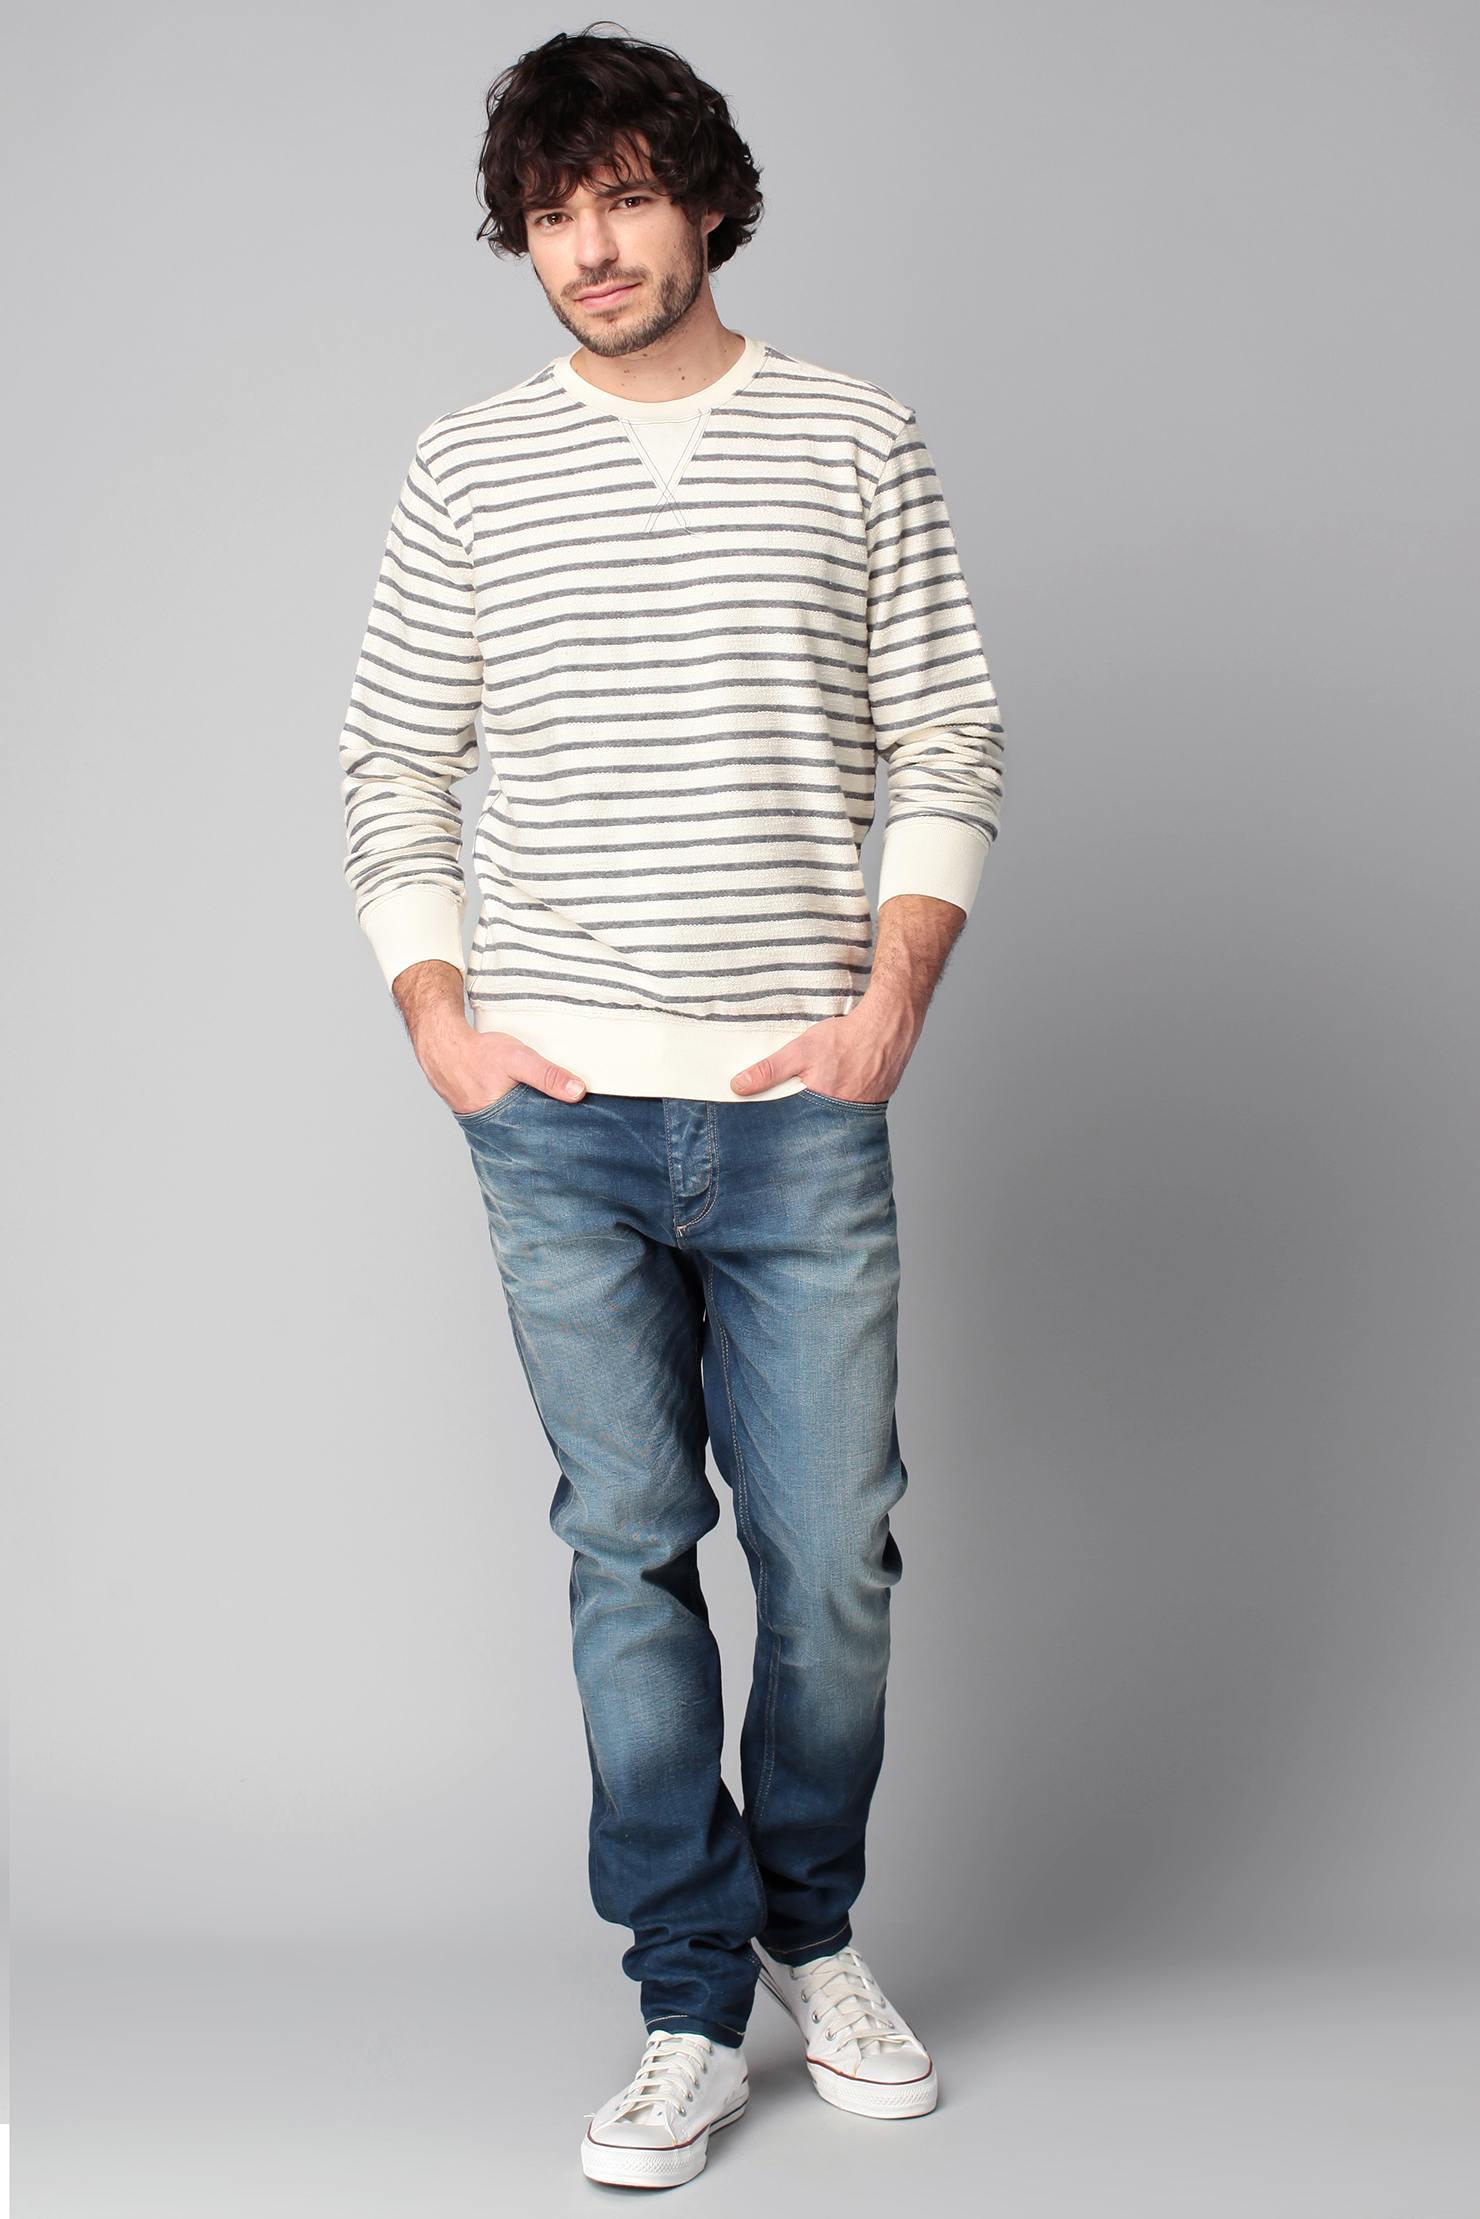 Lyst - Pepe Jeans Sweatshirt in White for Men